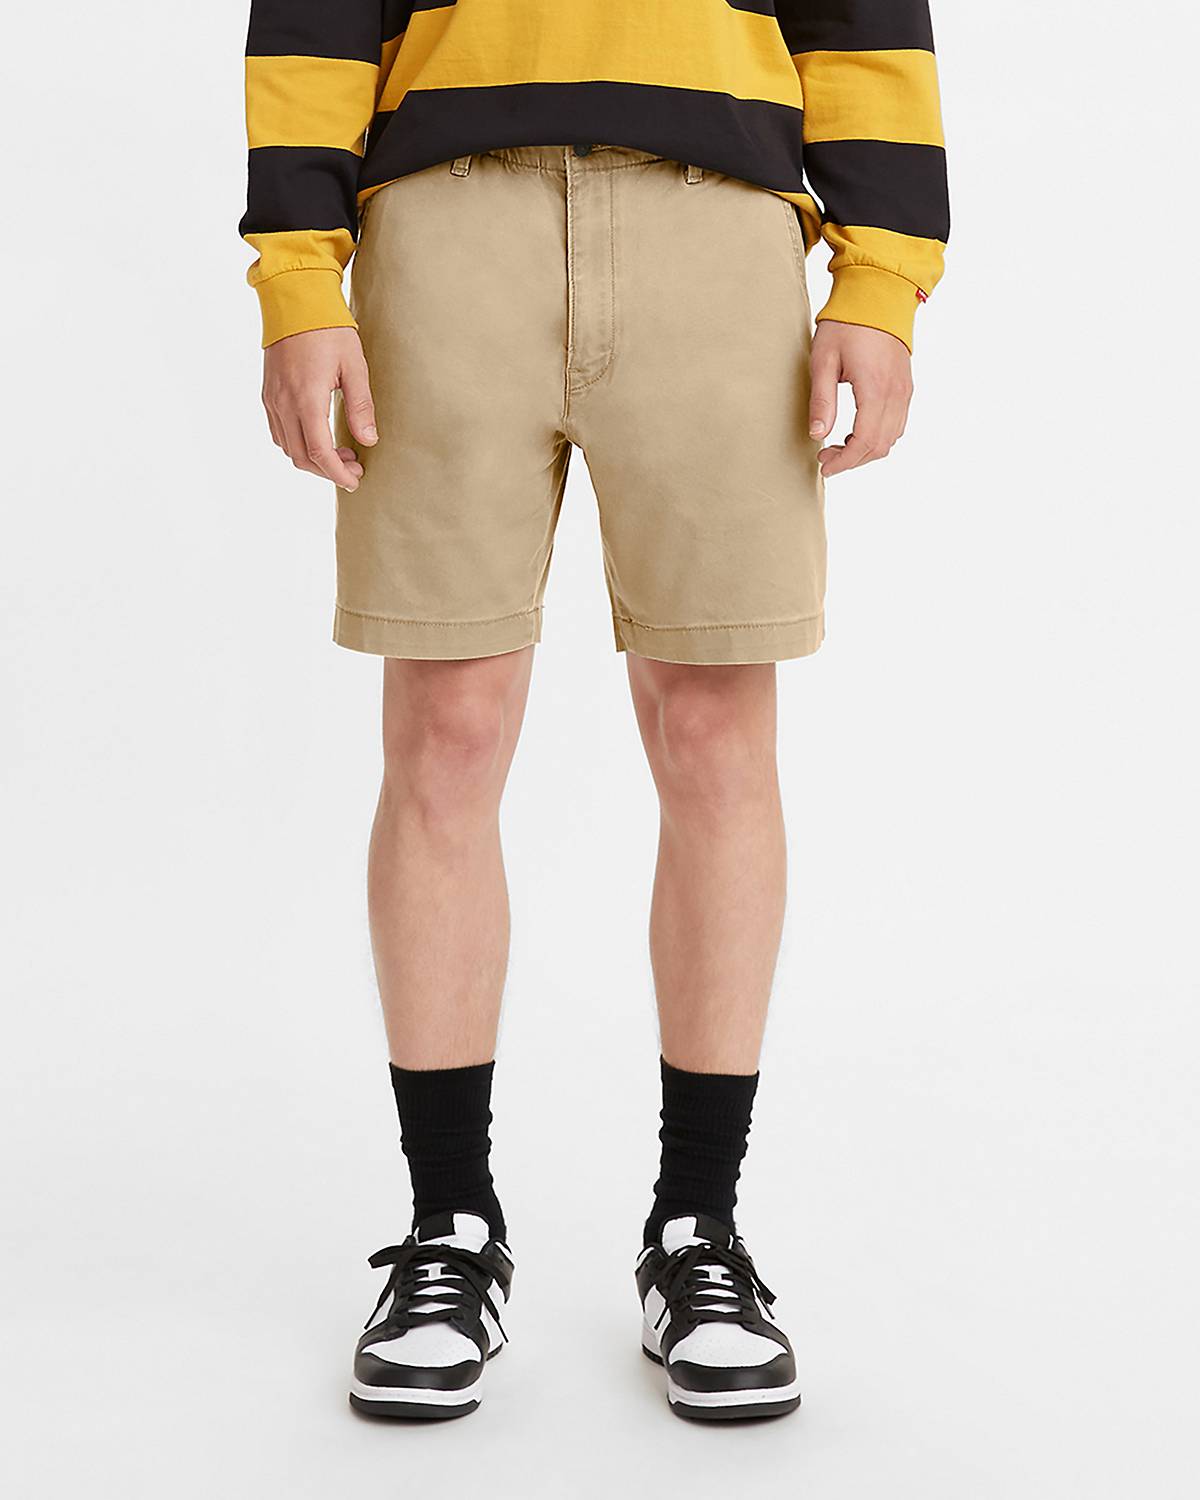 No Man Should Wear Salmon Colored Shorts